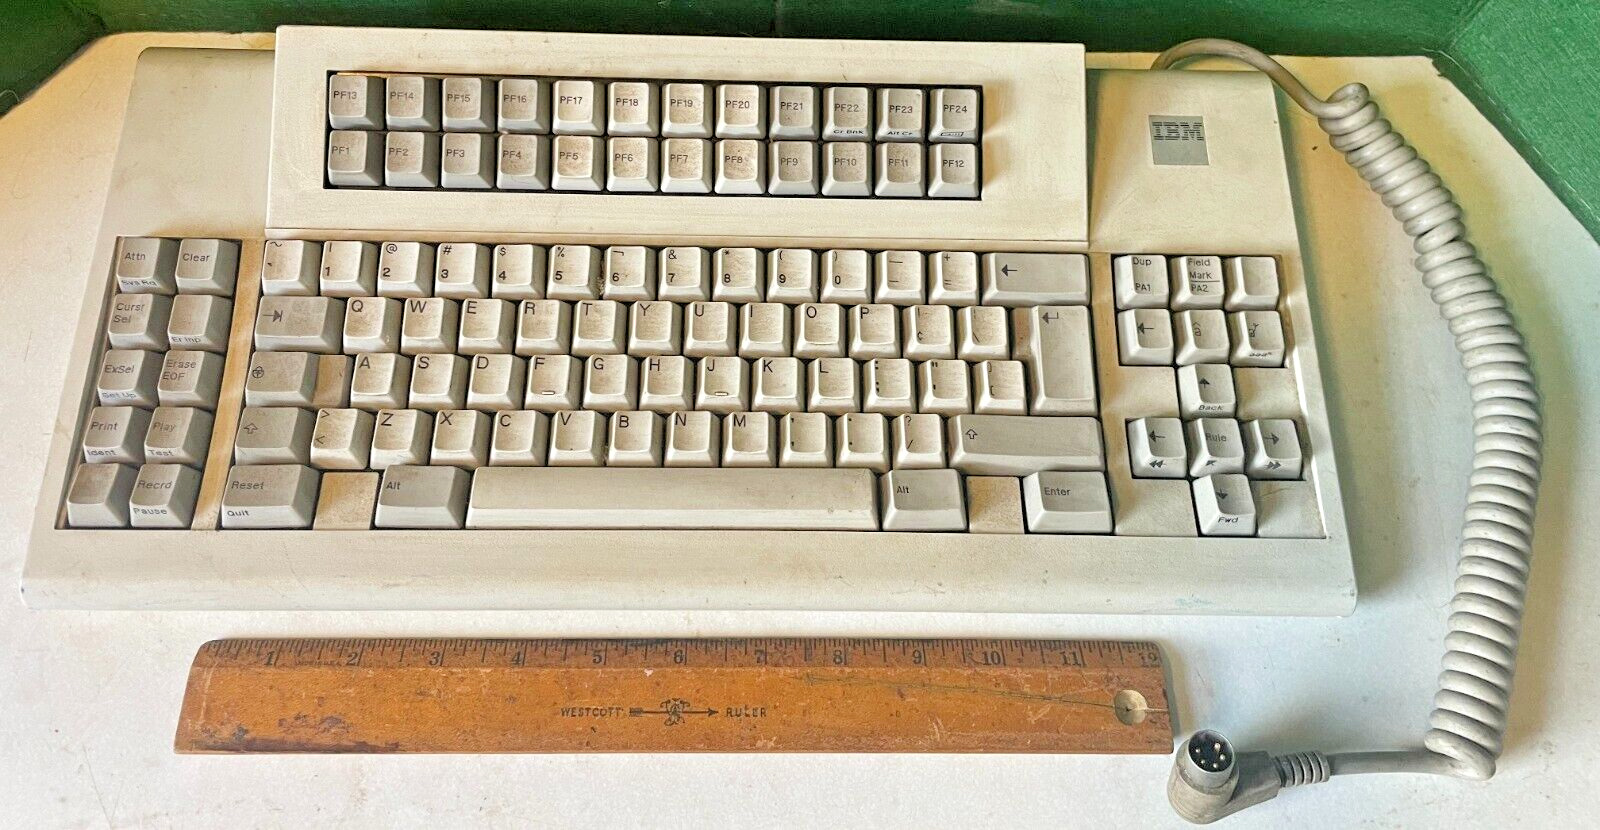 Rare Vintage IBM Keyboard Model 00, 73X3832, 88?  Dated 1987